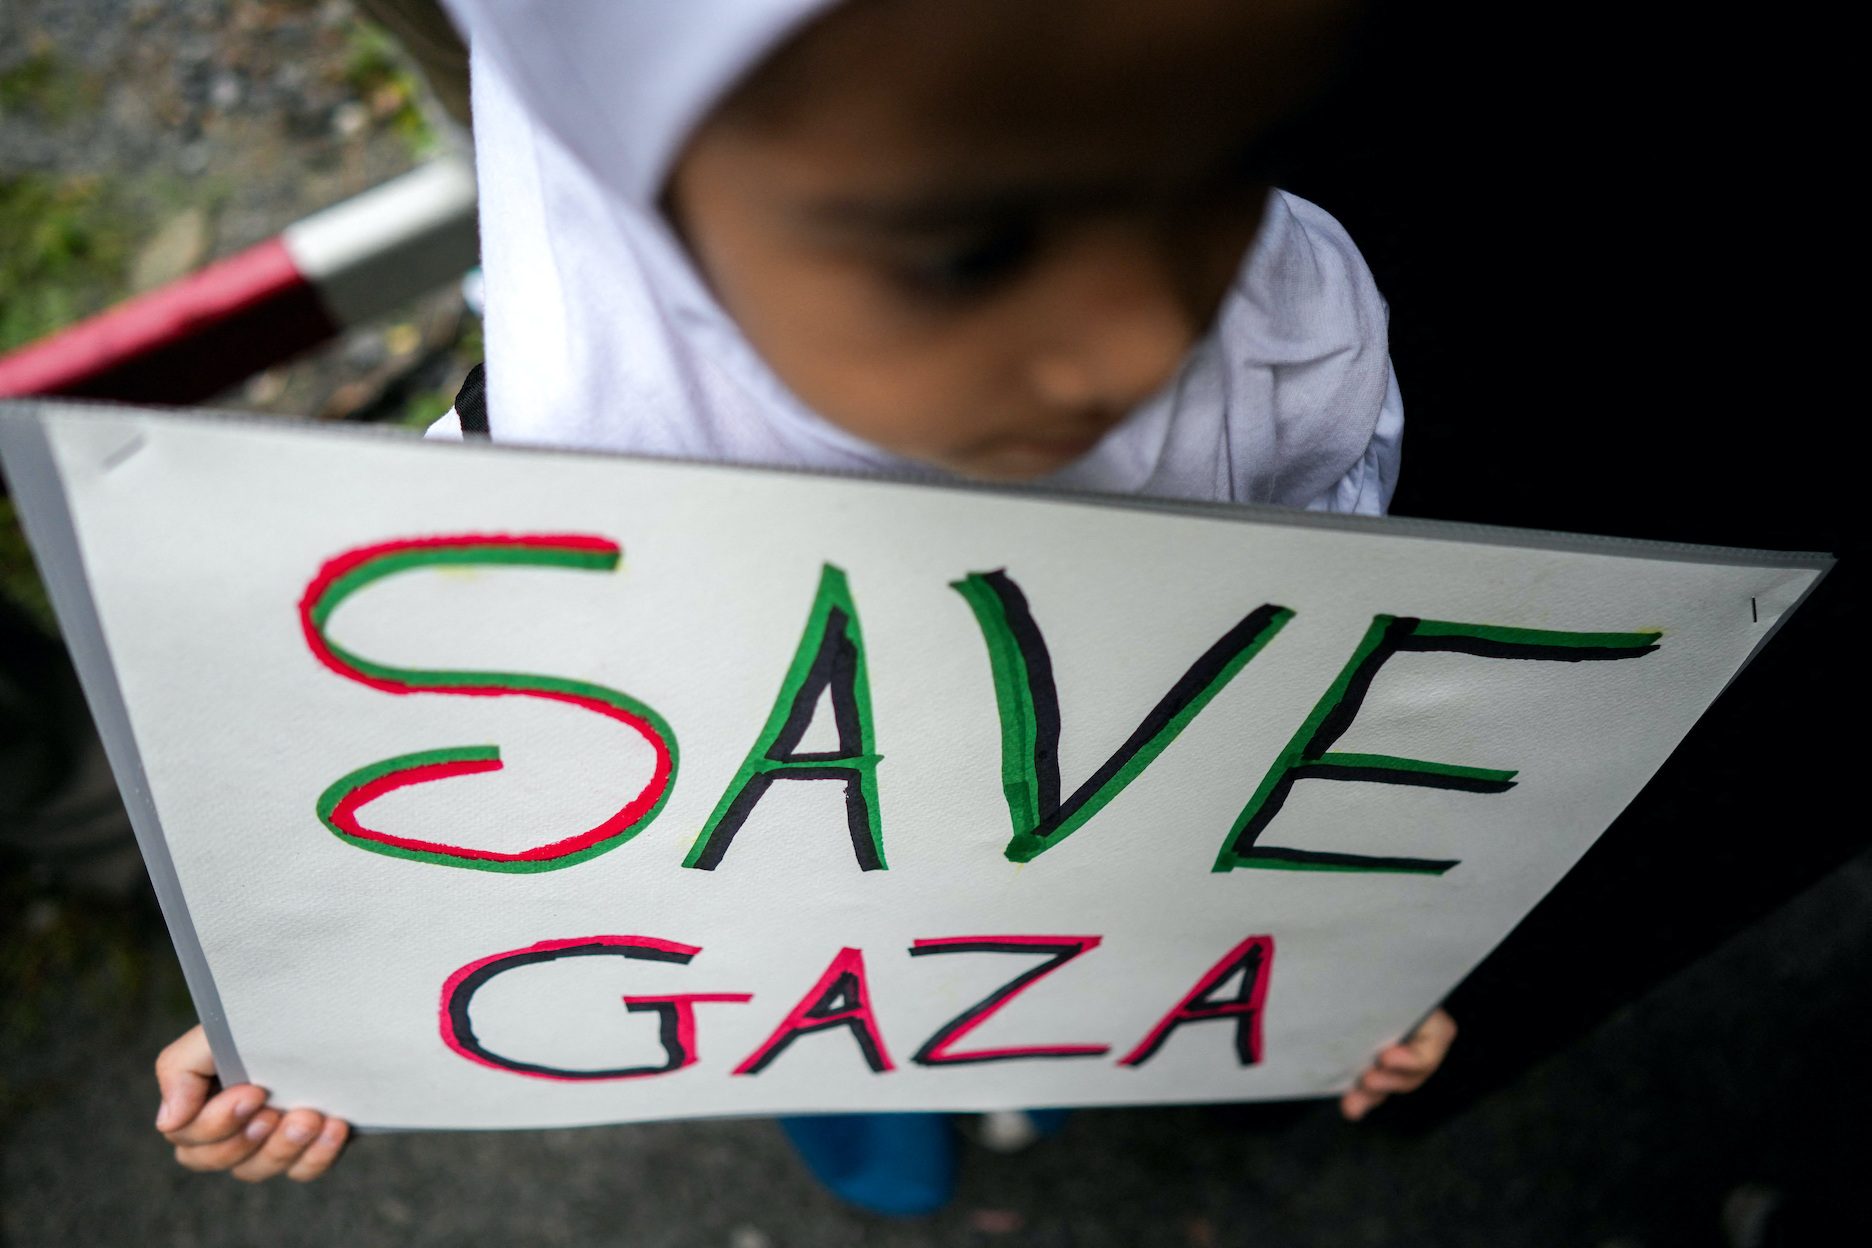 UP Muslim students urge boycott of Israel goods, call for Palestine freedom